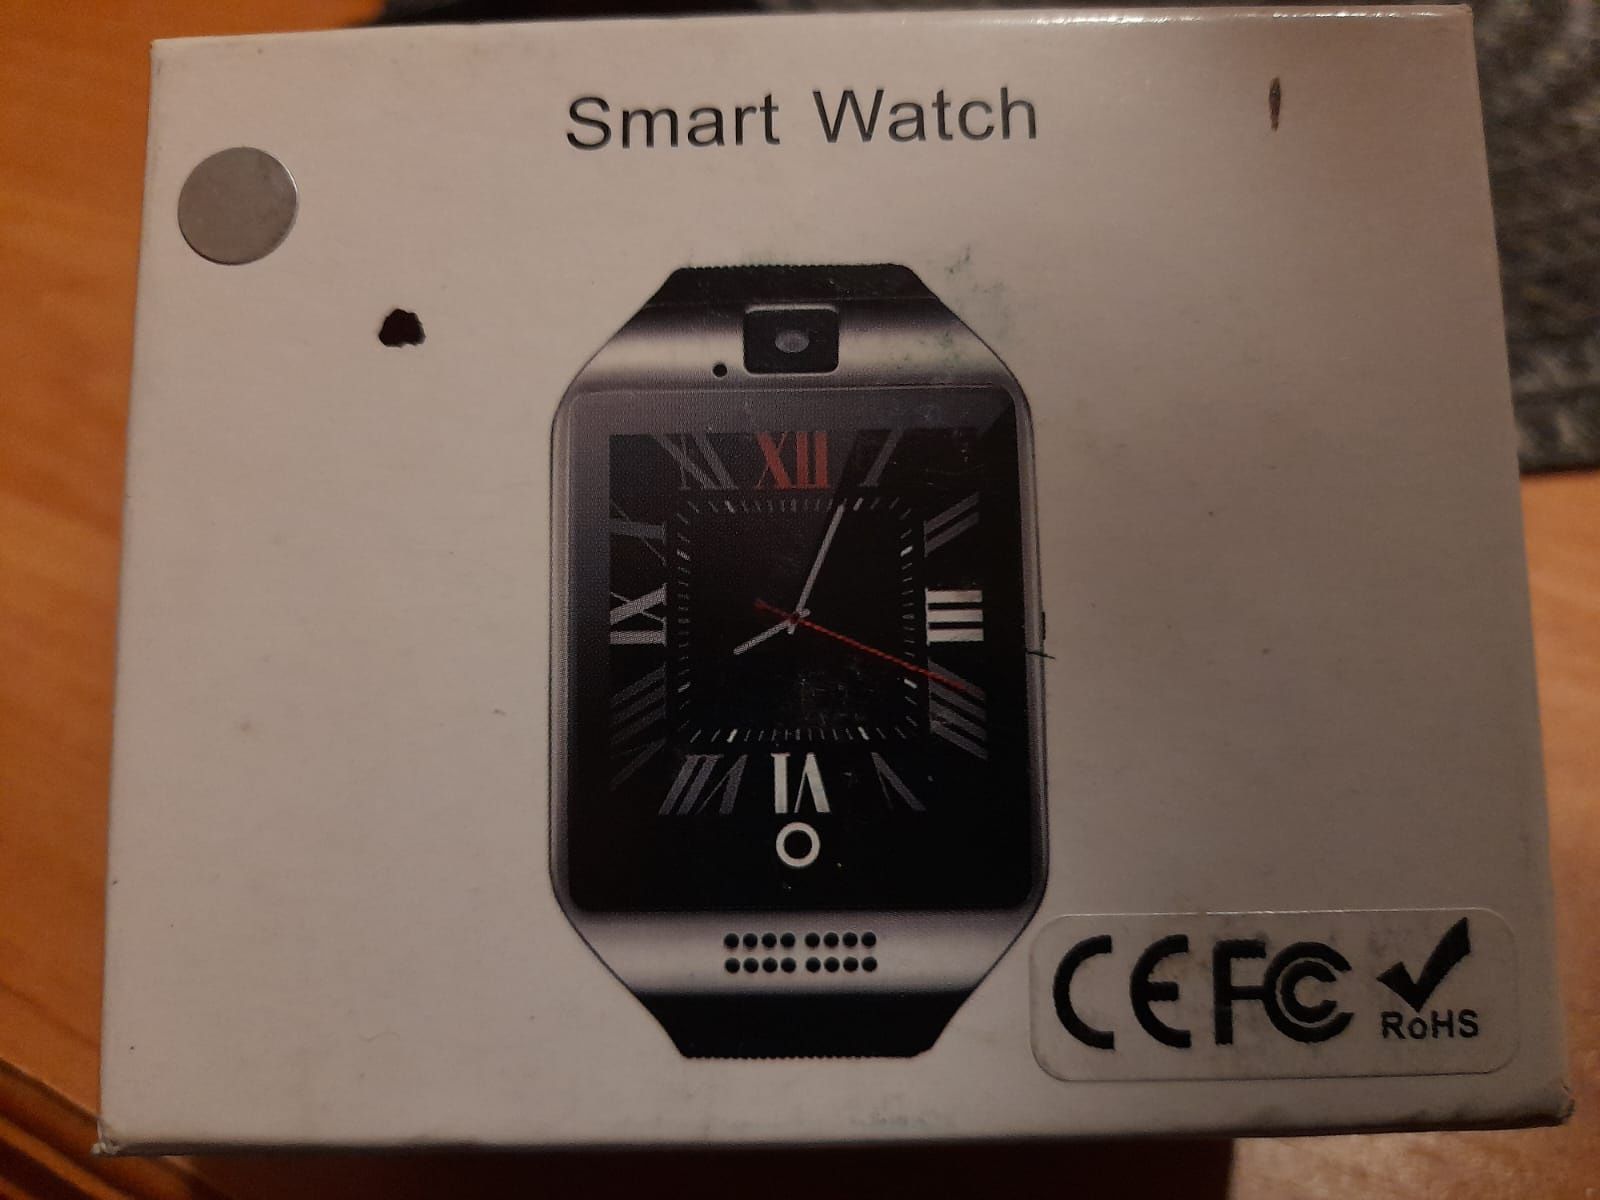 Smart watch czarny